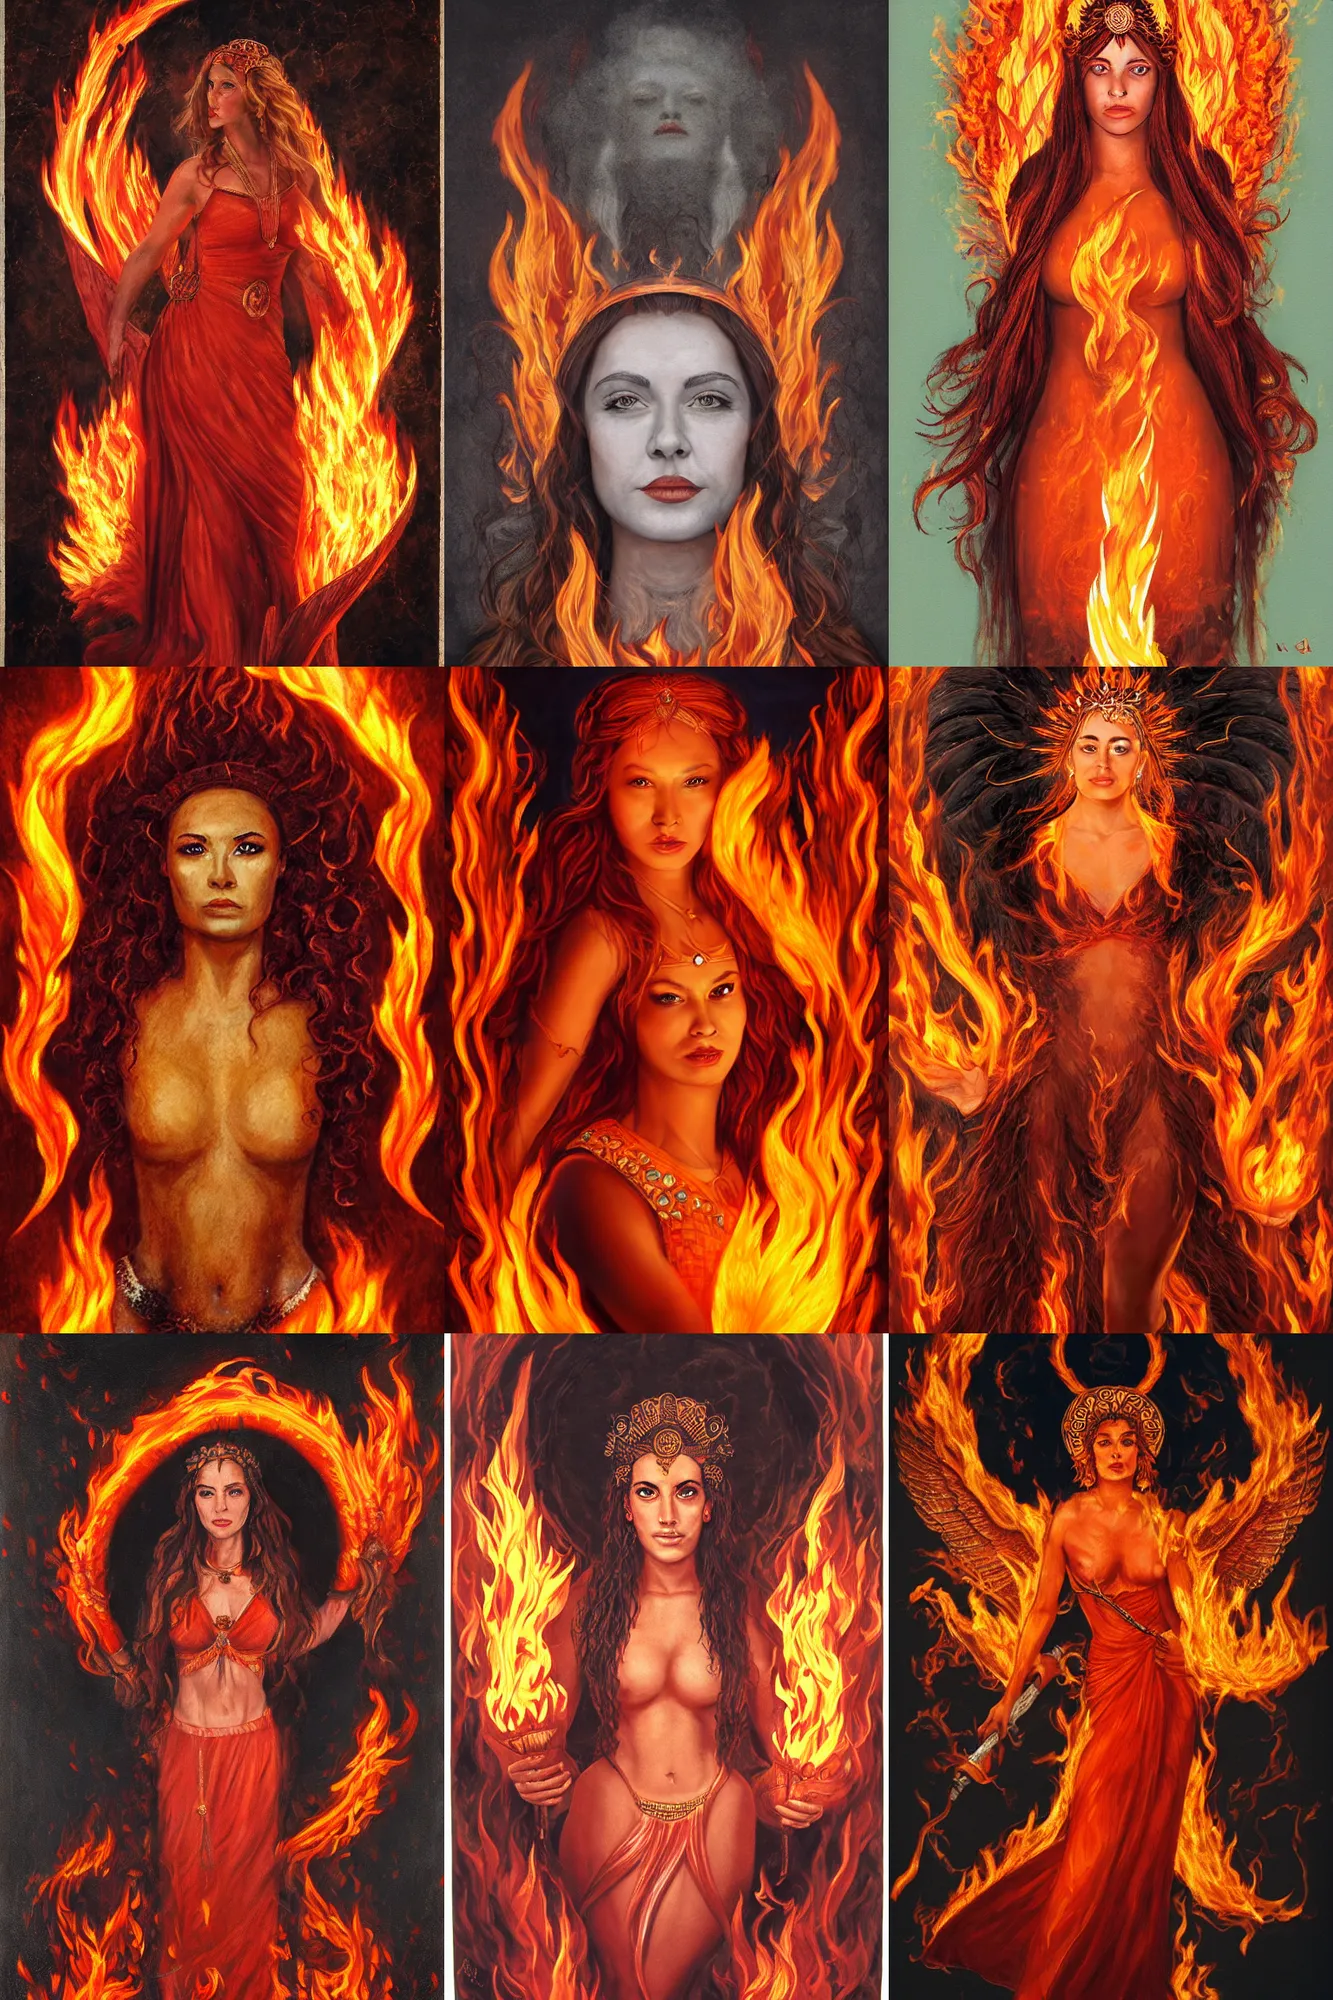 Prompt: Full Portrait of the goddess of fire